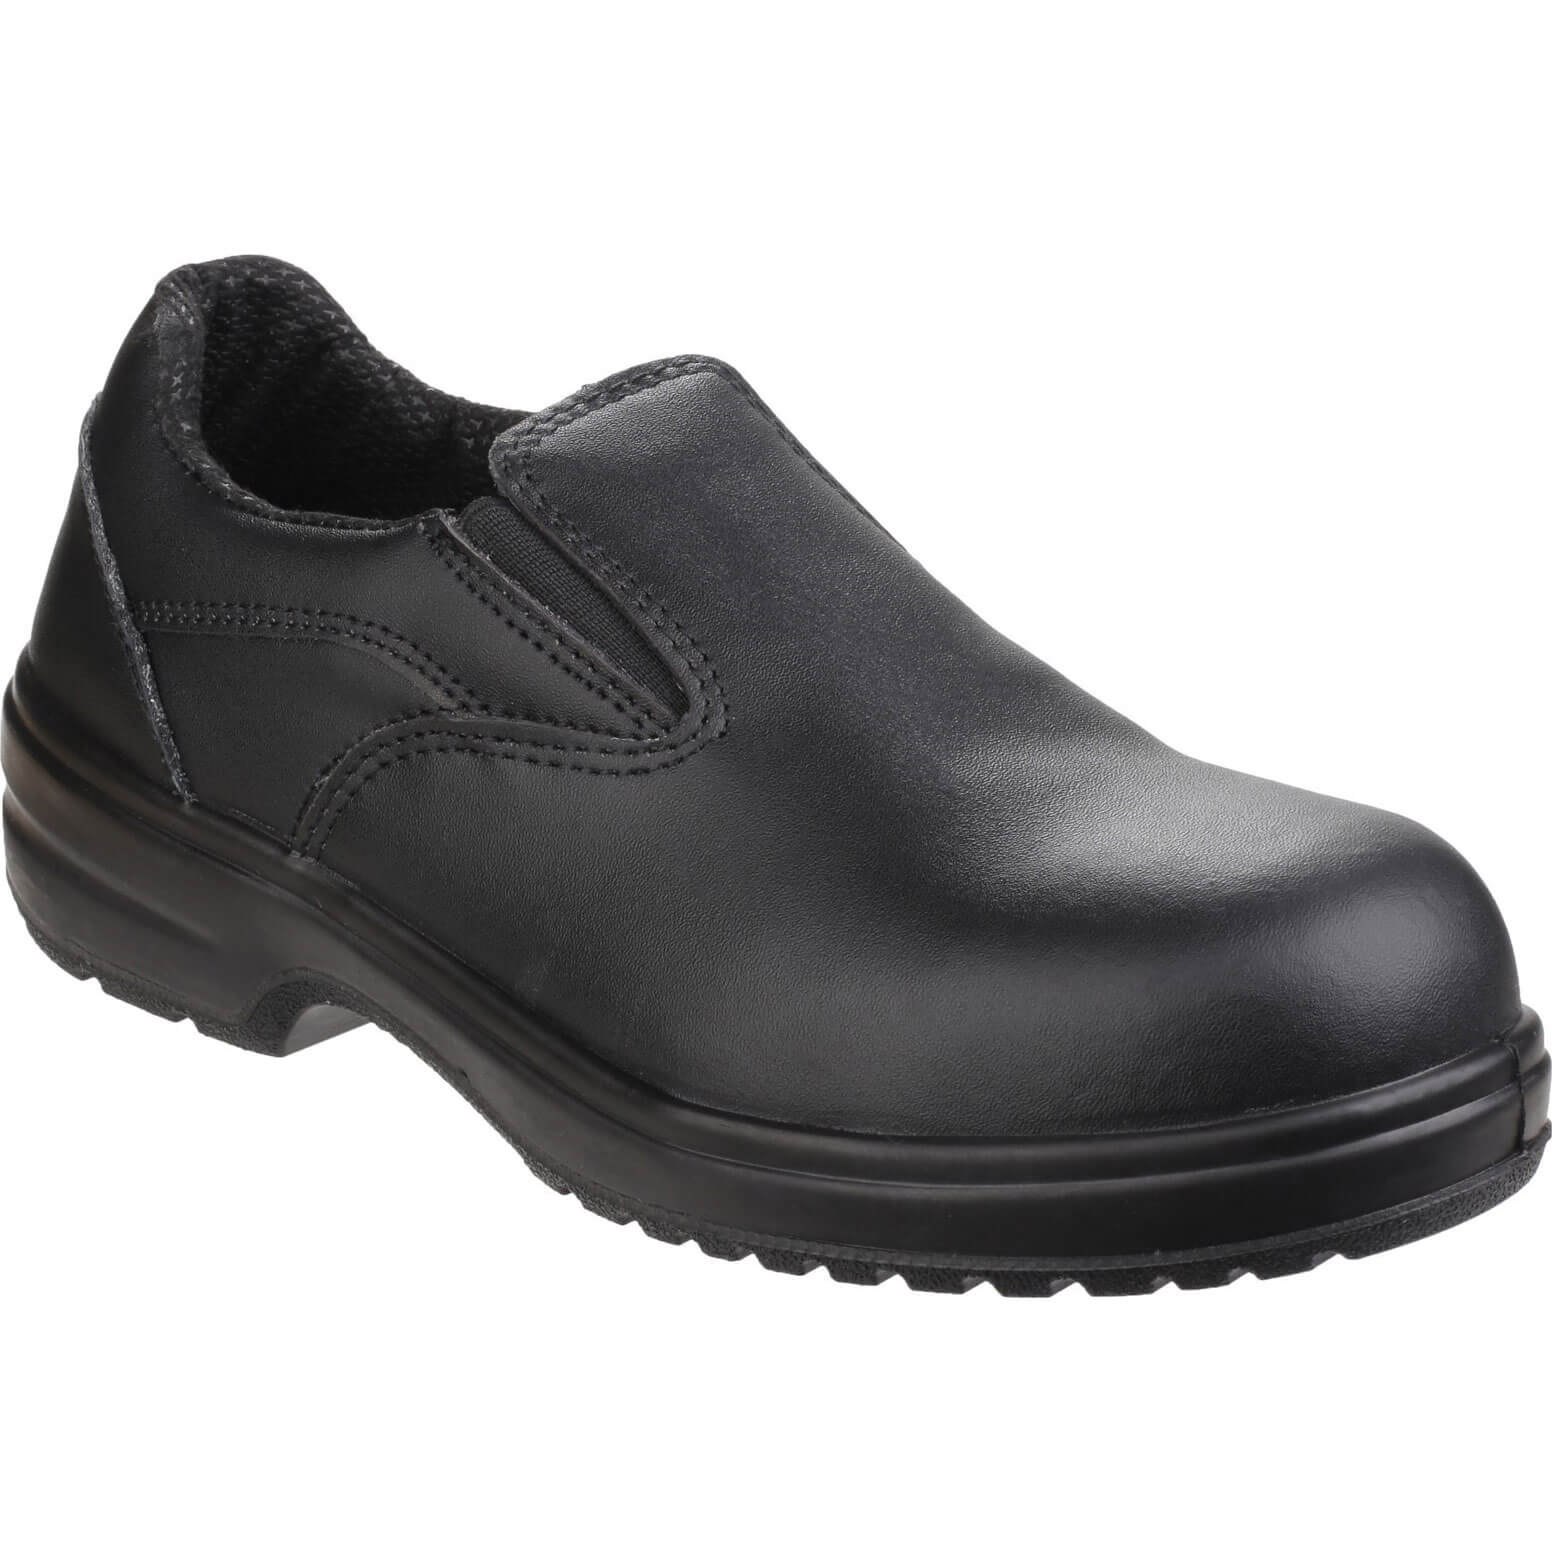 Photo of Amblers Safety Fs94c Lightweight Slip On Safety Shoe Black Size 5